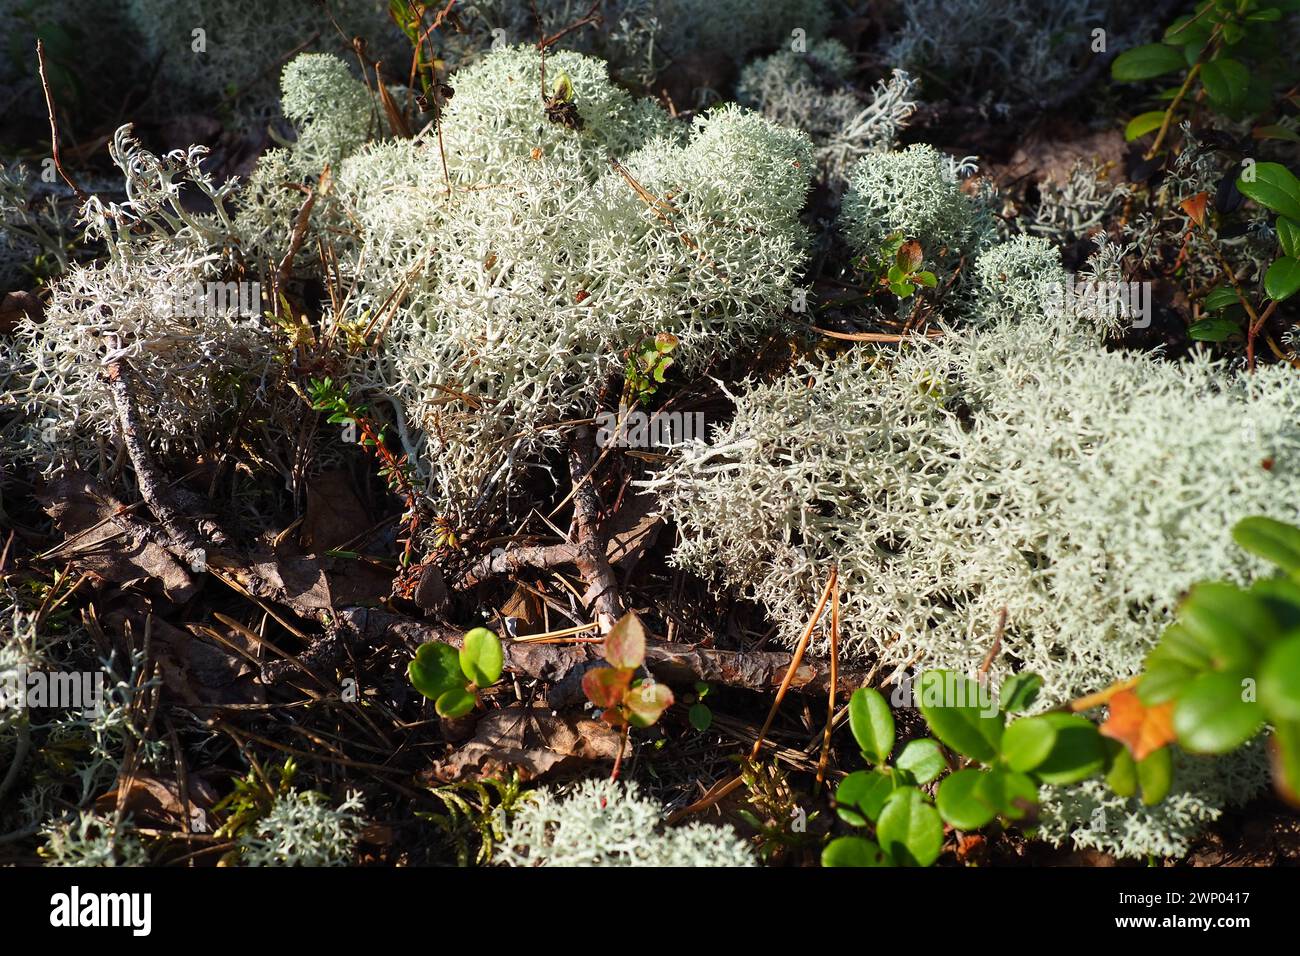 Reindeer lichen reindeer moss. Cladonia, genus of lichens in the Cladonia family Cladoniaceae. Mushroom kingdom. Karelia, Russia taiga tundra Stock Photo